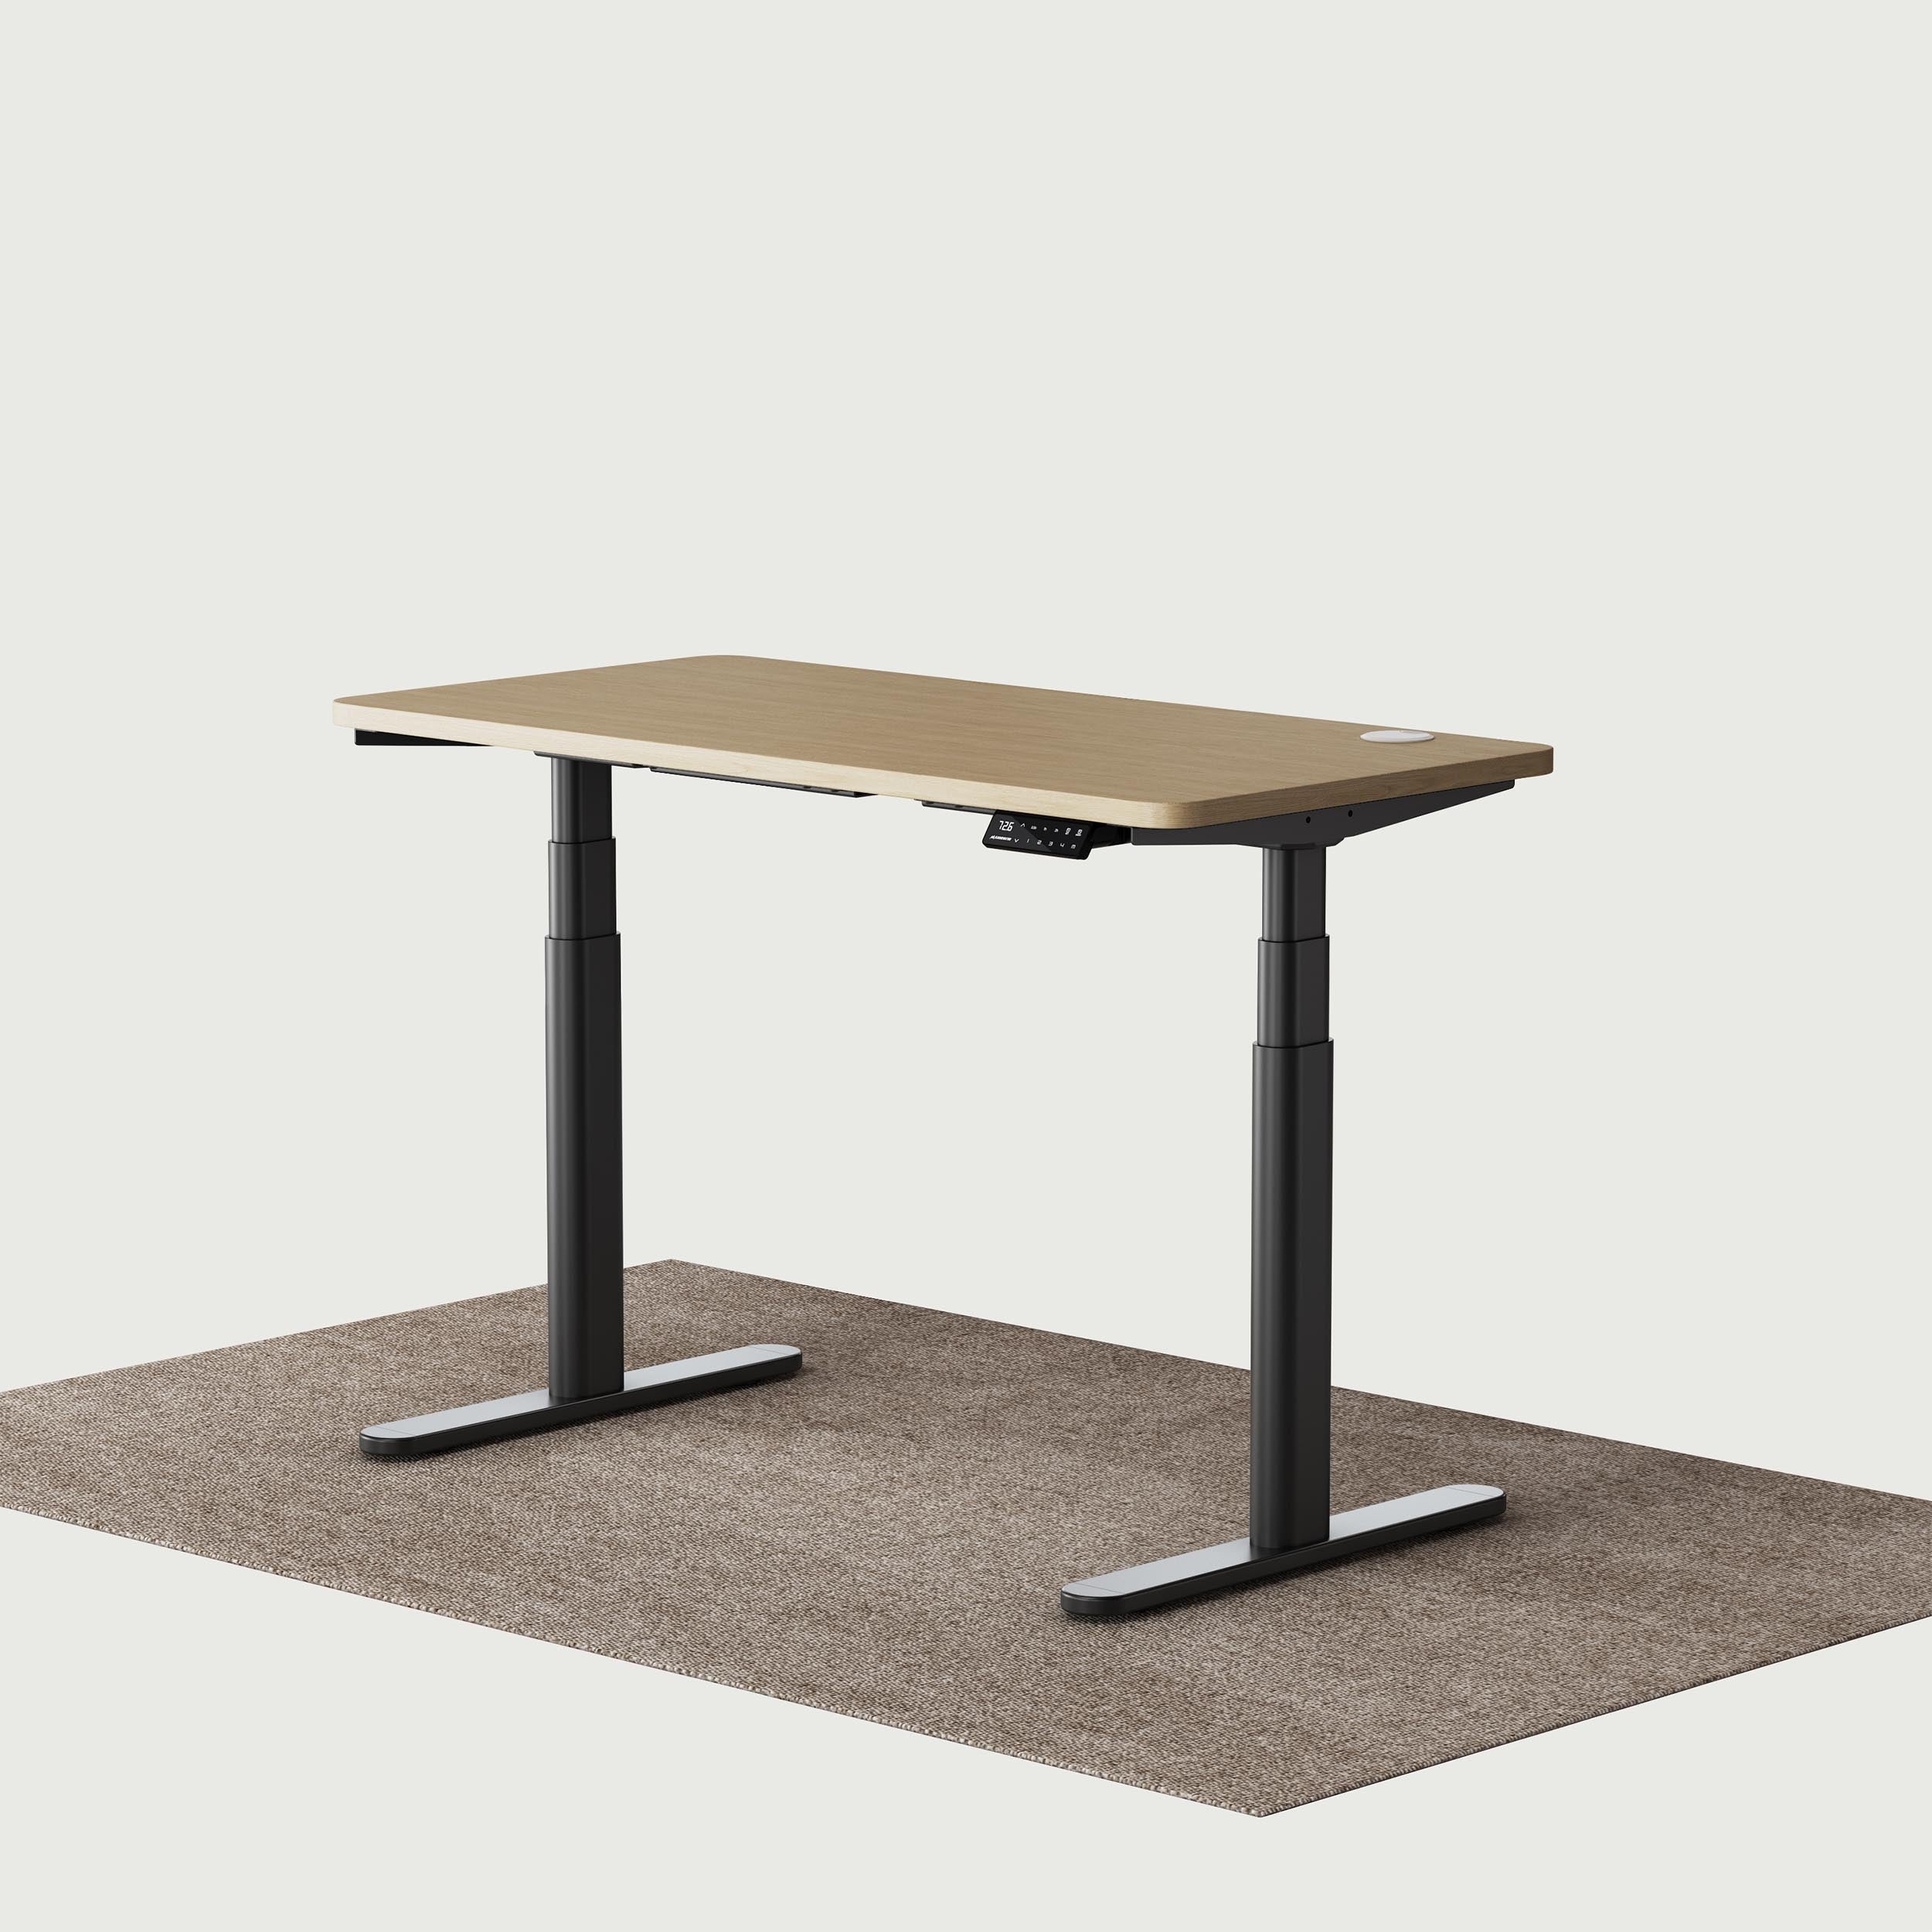 TH2 Pro Plus black oval electric standing desk frame with oak 120x60 cm desktop